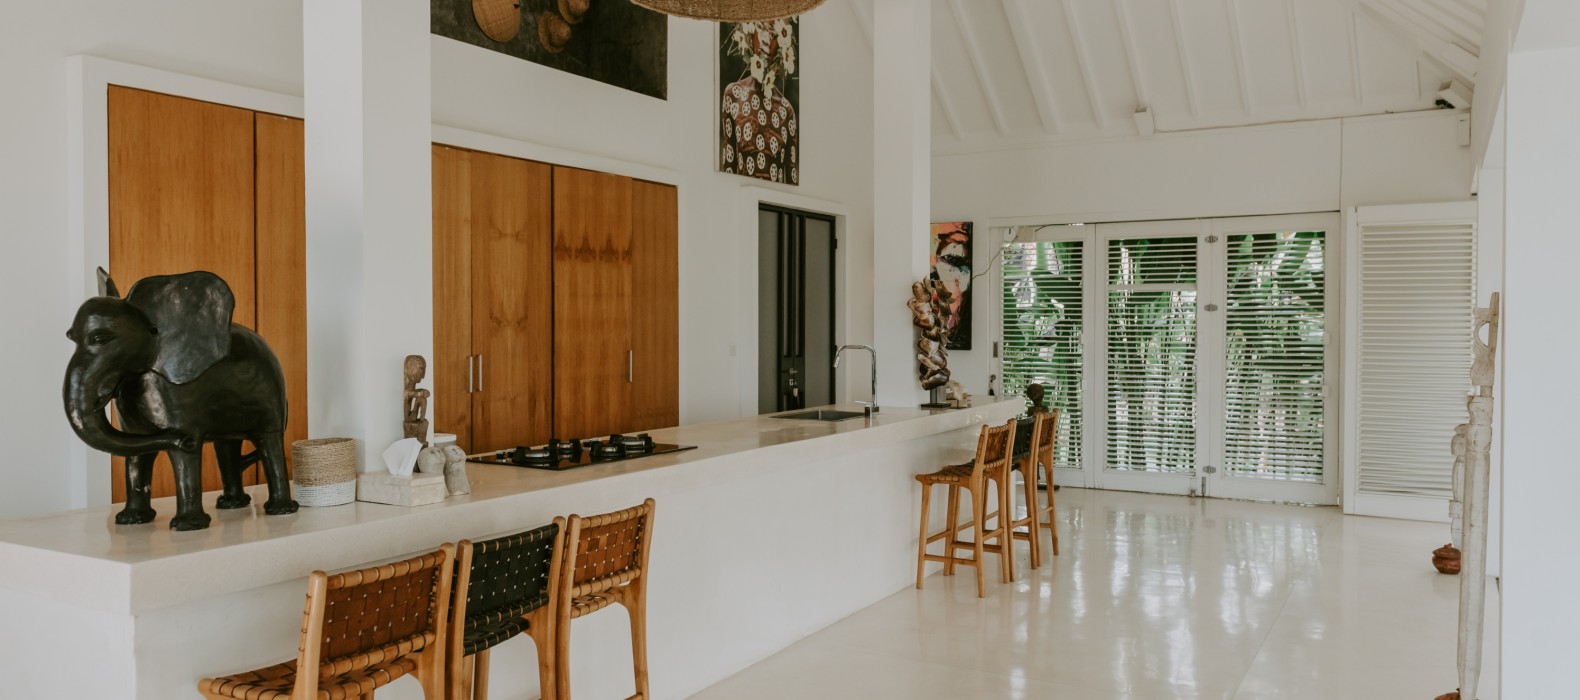 Kitchen of Villa Fortuna in Bali